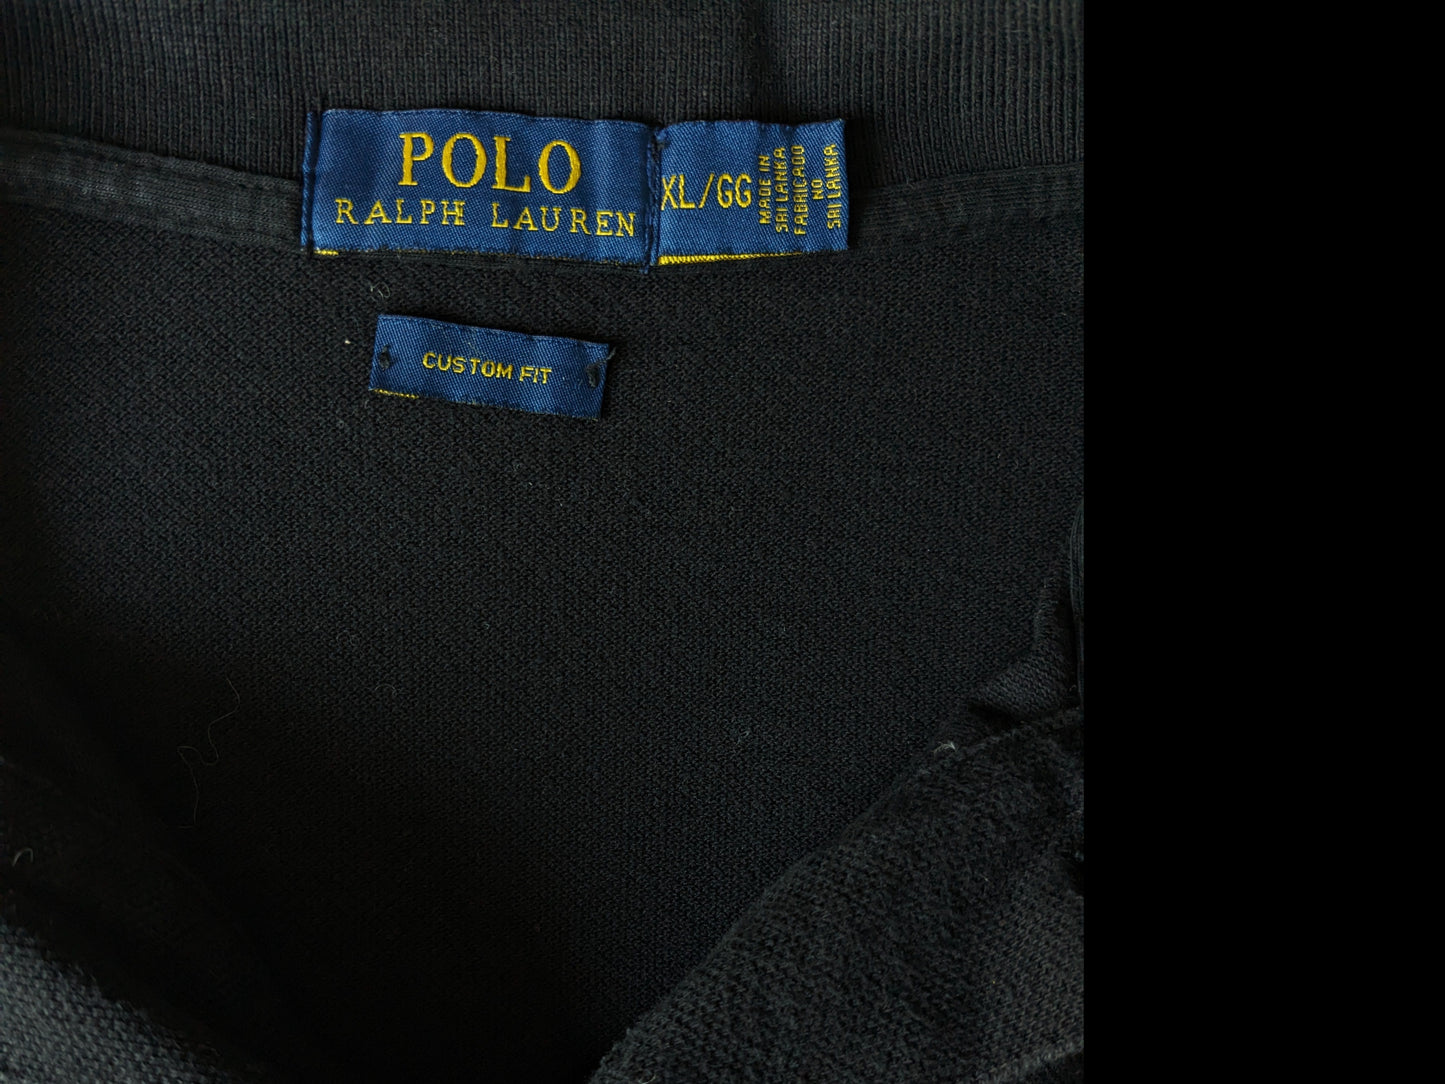 Polo Ralph Lauren polo. Donker Blauw Rood gekleurd. Maat XL. Custom Fit.